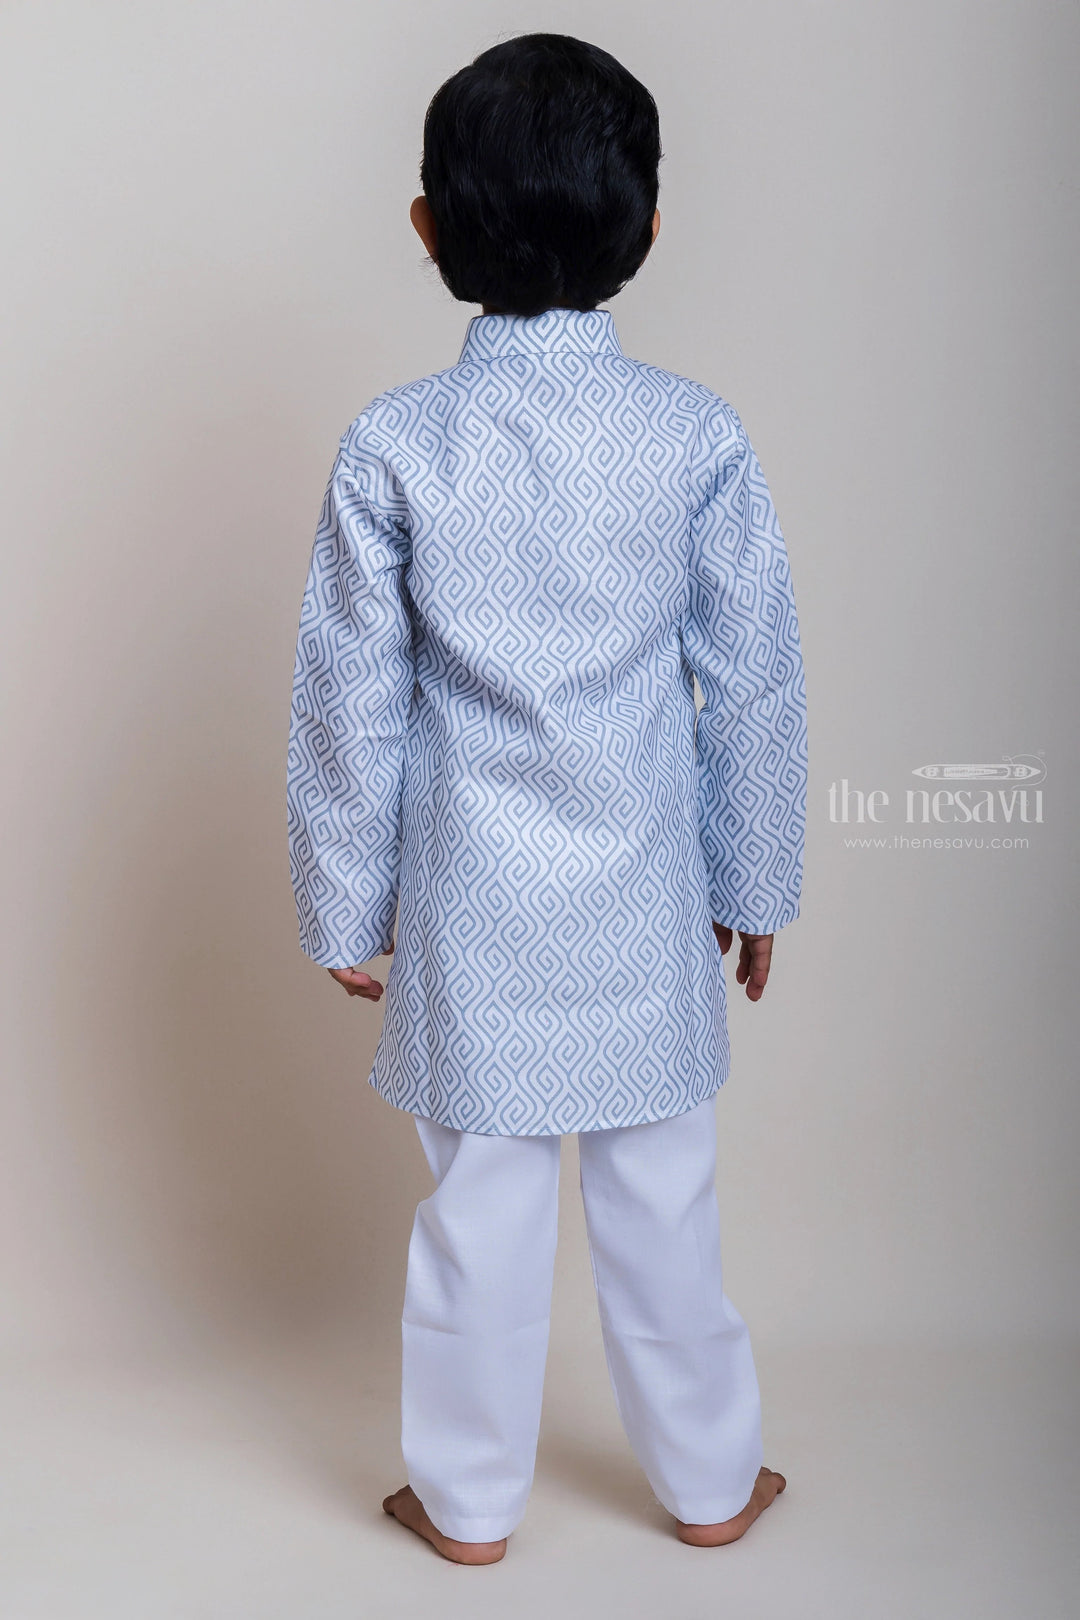 The Nesavu Boys Kurtha Set Stylish Grey Latest Printed Kurta With Comfortable White Cotton Pant For Boys Nesavu Daily Wear Kurta And Pant| Casual Wear Collection| The Nesavu